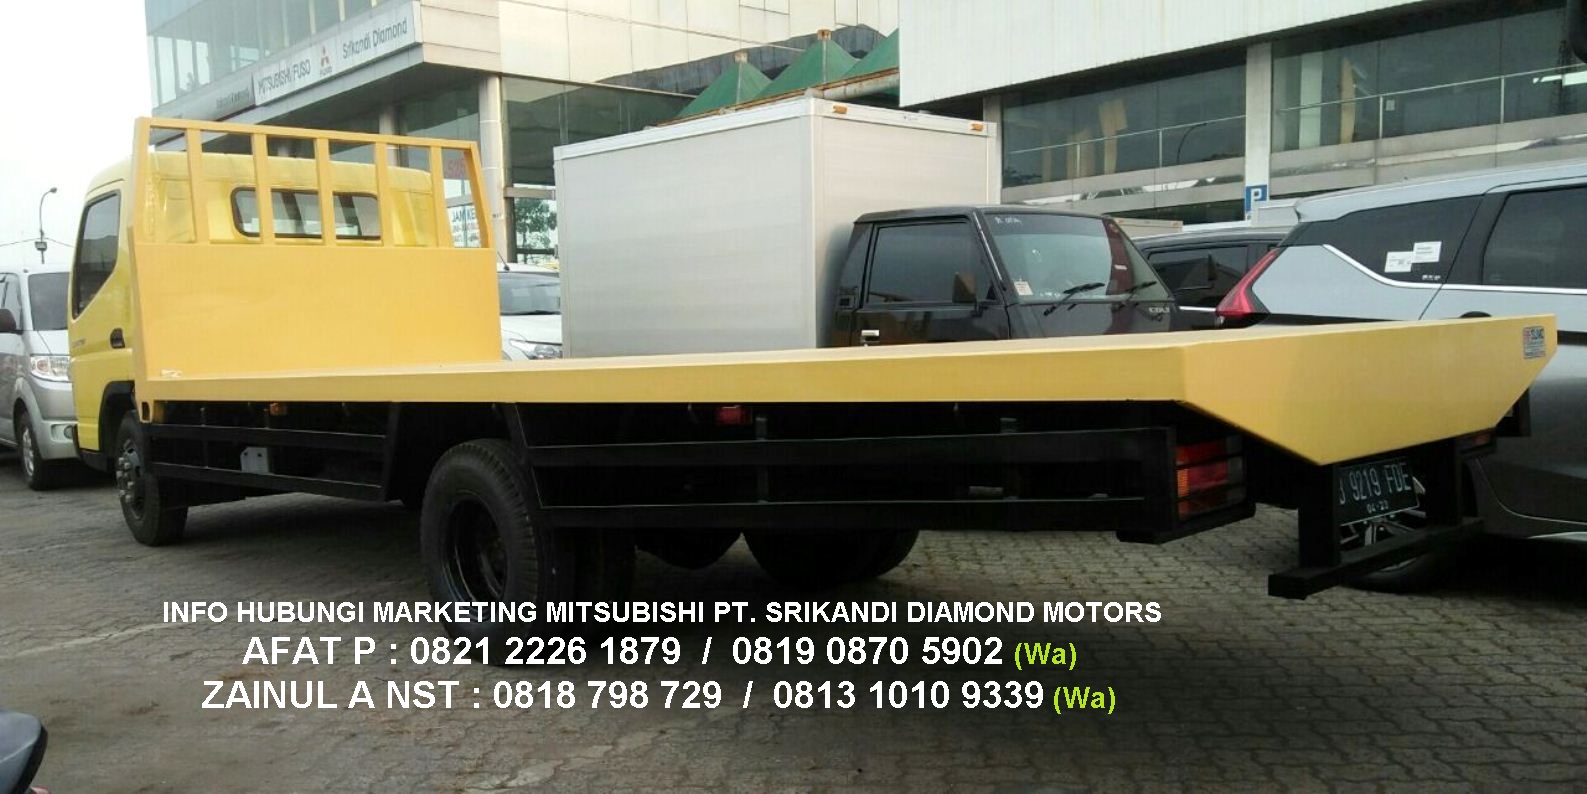 Dealer Mitsubishi Niaga Dki Jakarta harga mitsubishi 